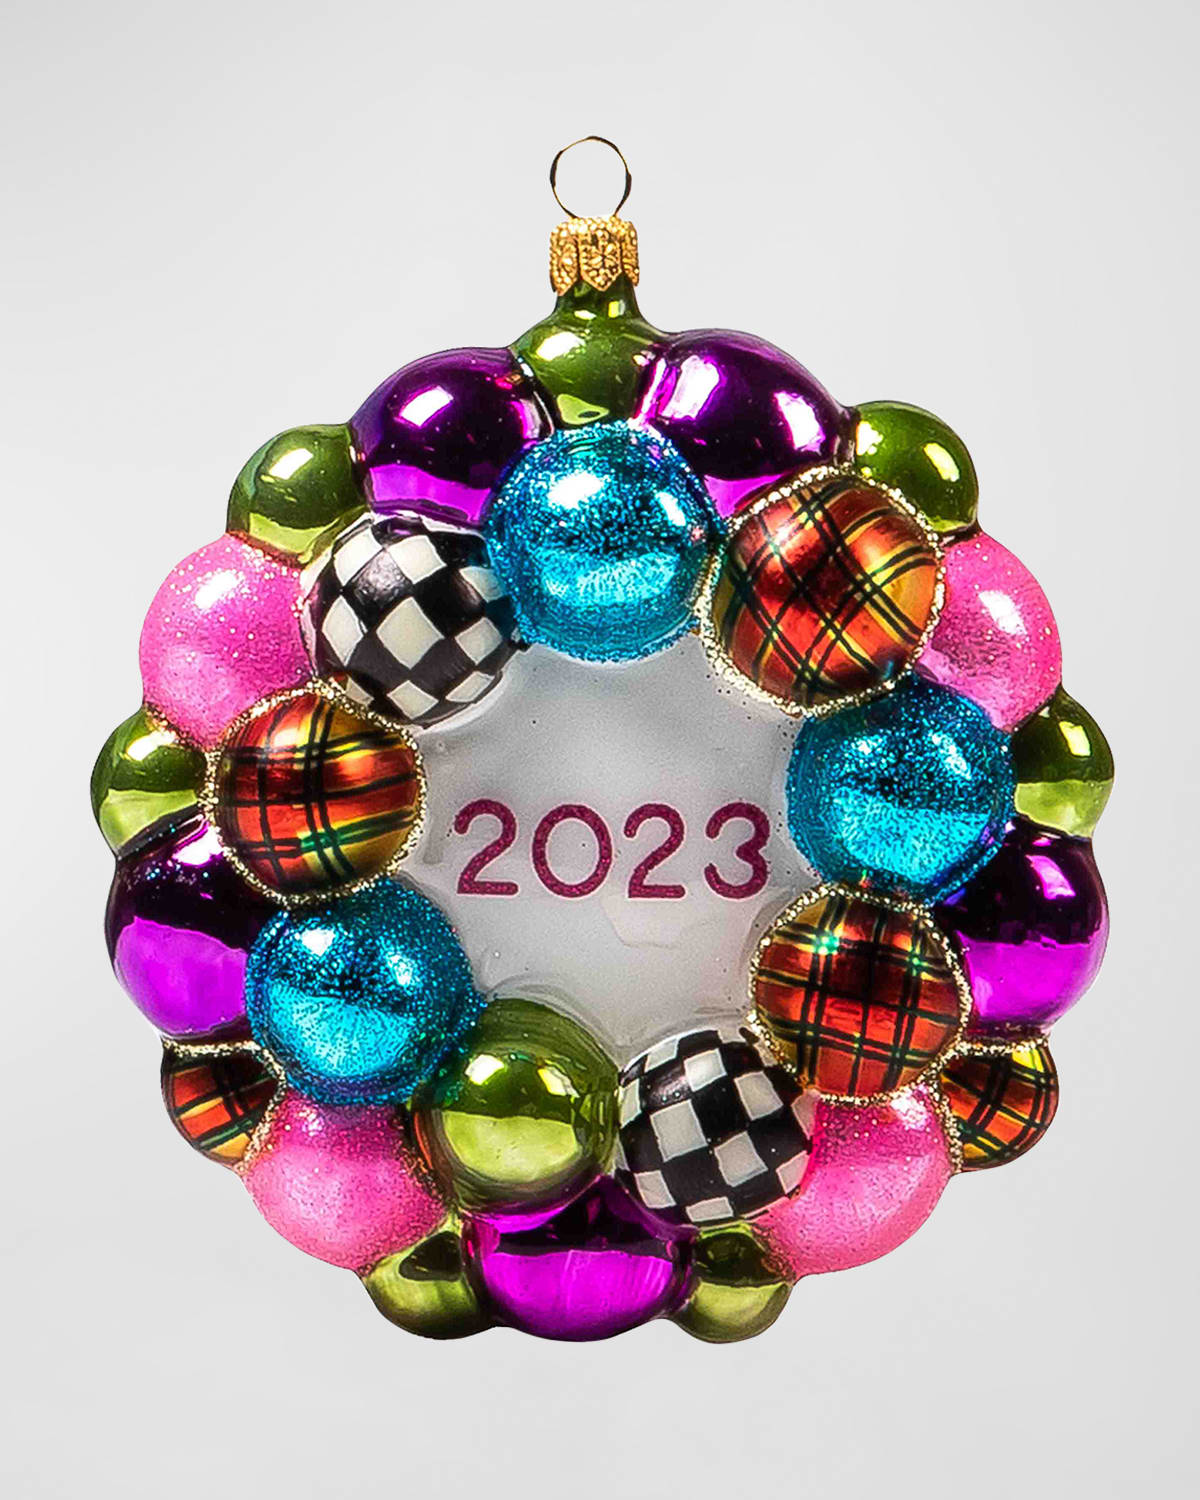 Mackenzie-childs Granny Kitsch Dated Christmas 2023 Wreath Ornament